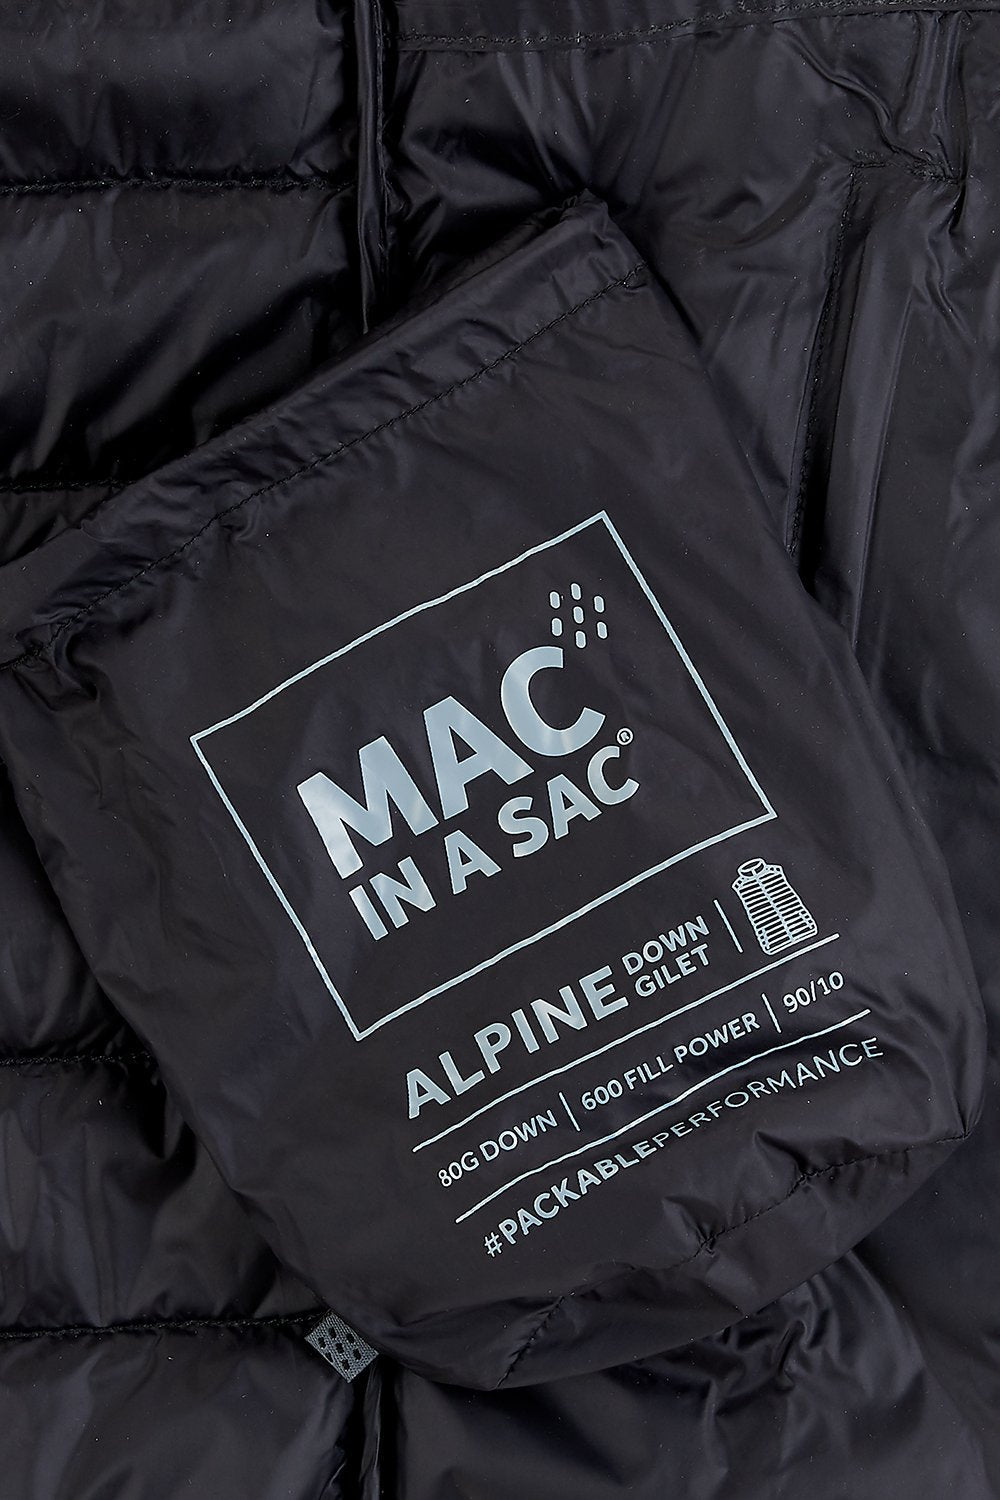 Alpine Mens Down Gilet - Jet Black-Mac in a Sac